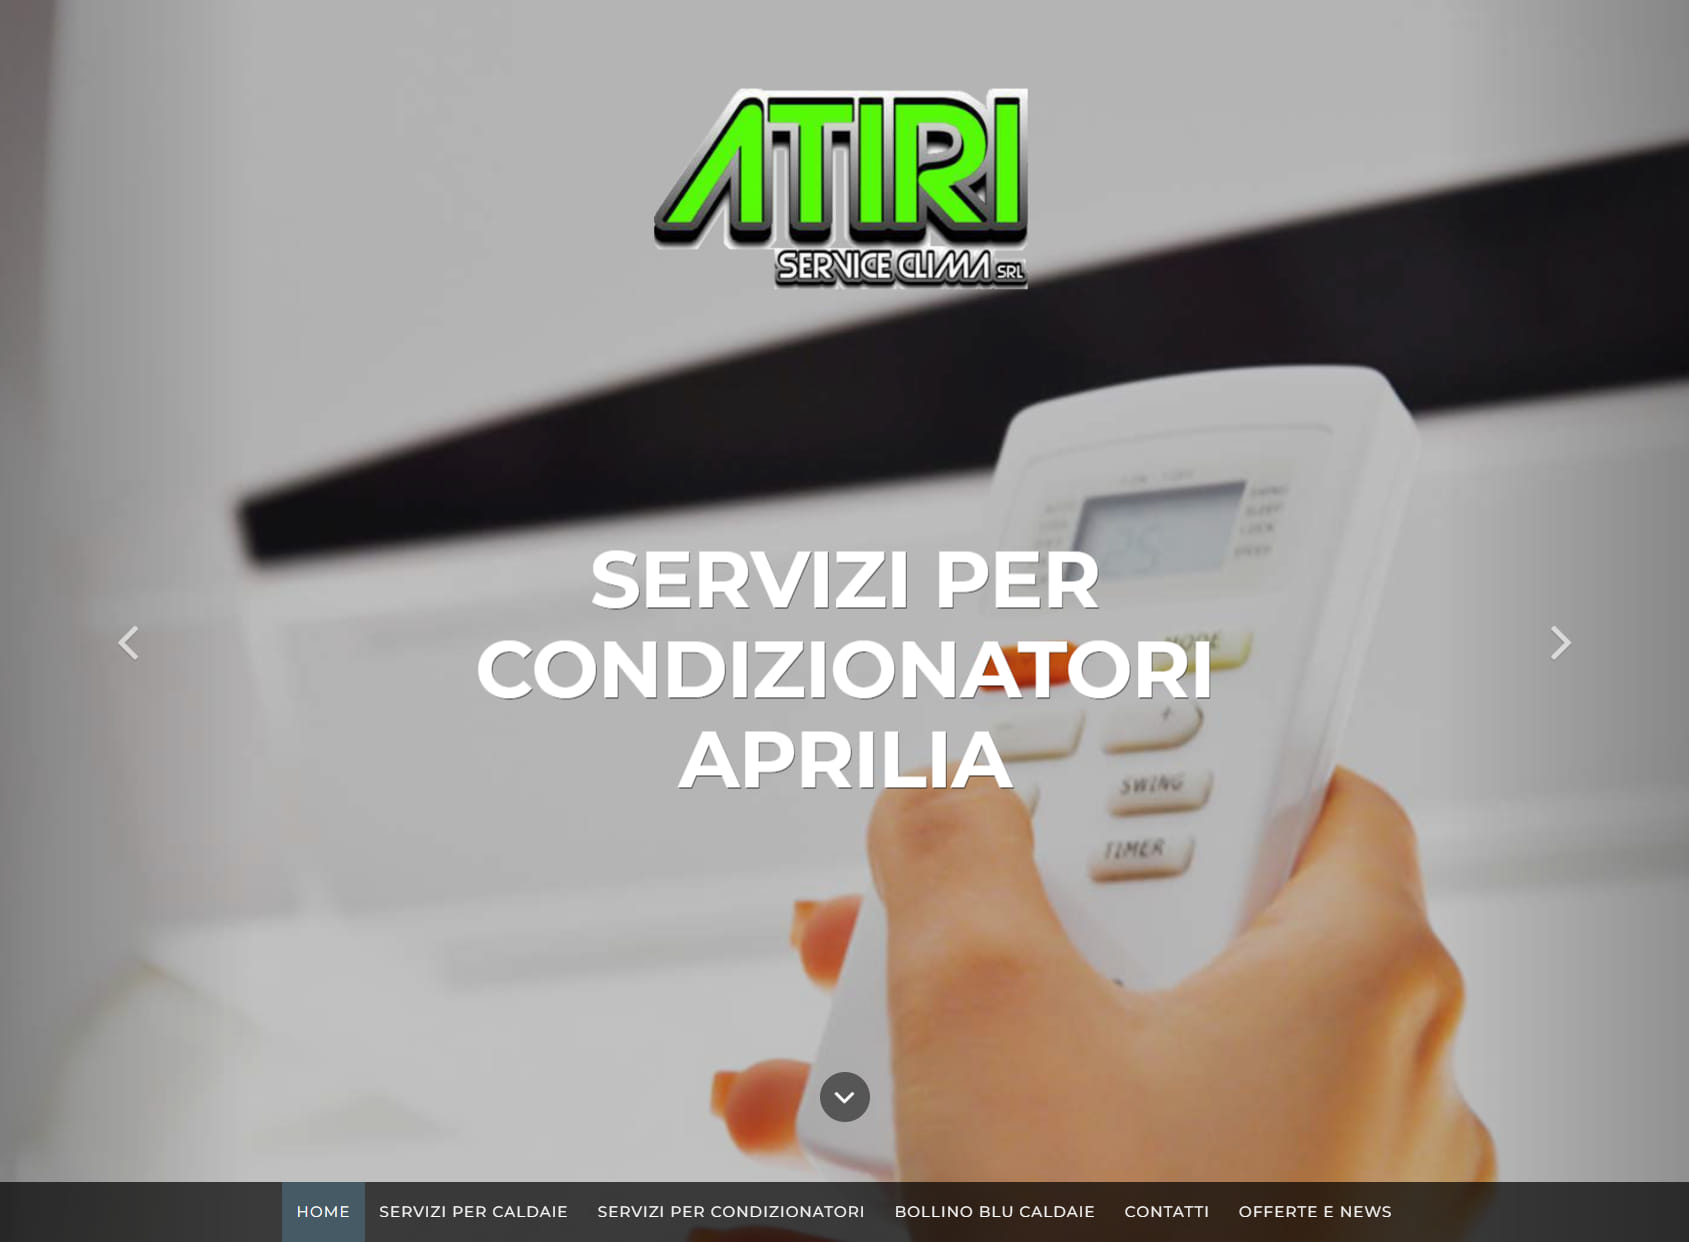 Angelo La Porta - Atiri Service Clima srl